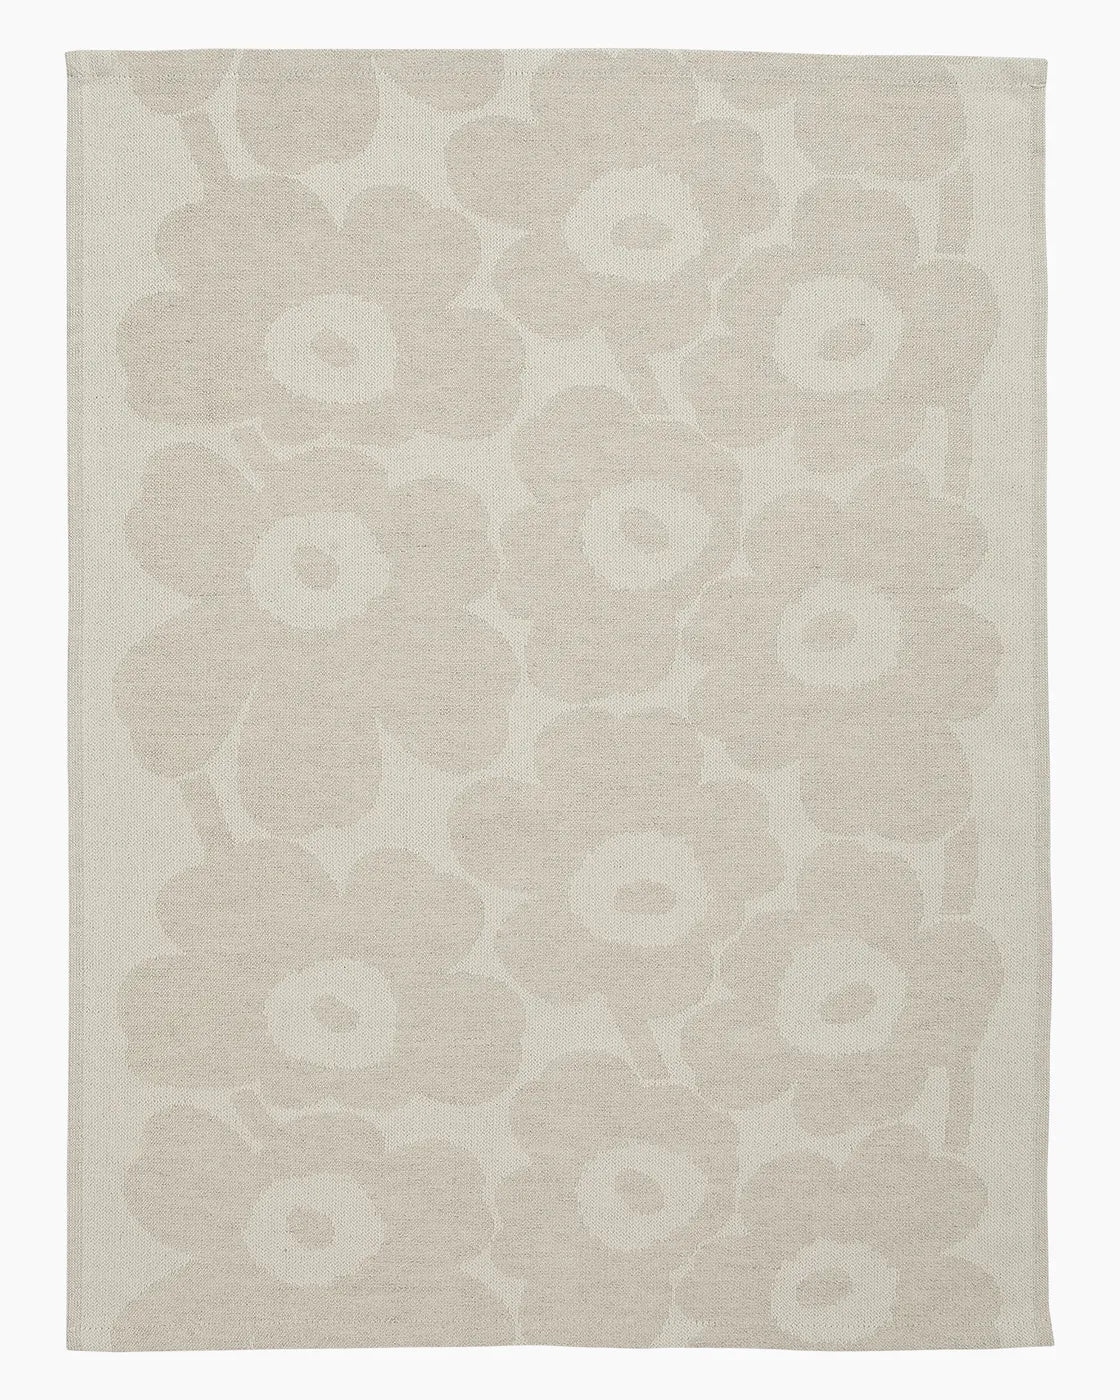 Pieni Unikko Kitchen Towel 50x70 cm TEA TOWEL off white beige 070515 181